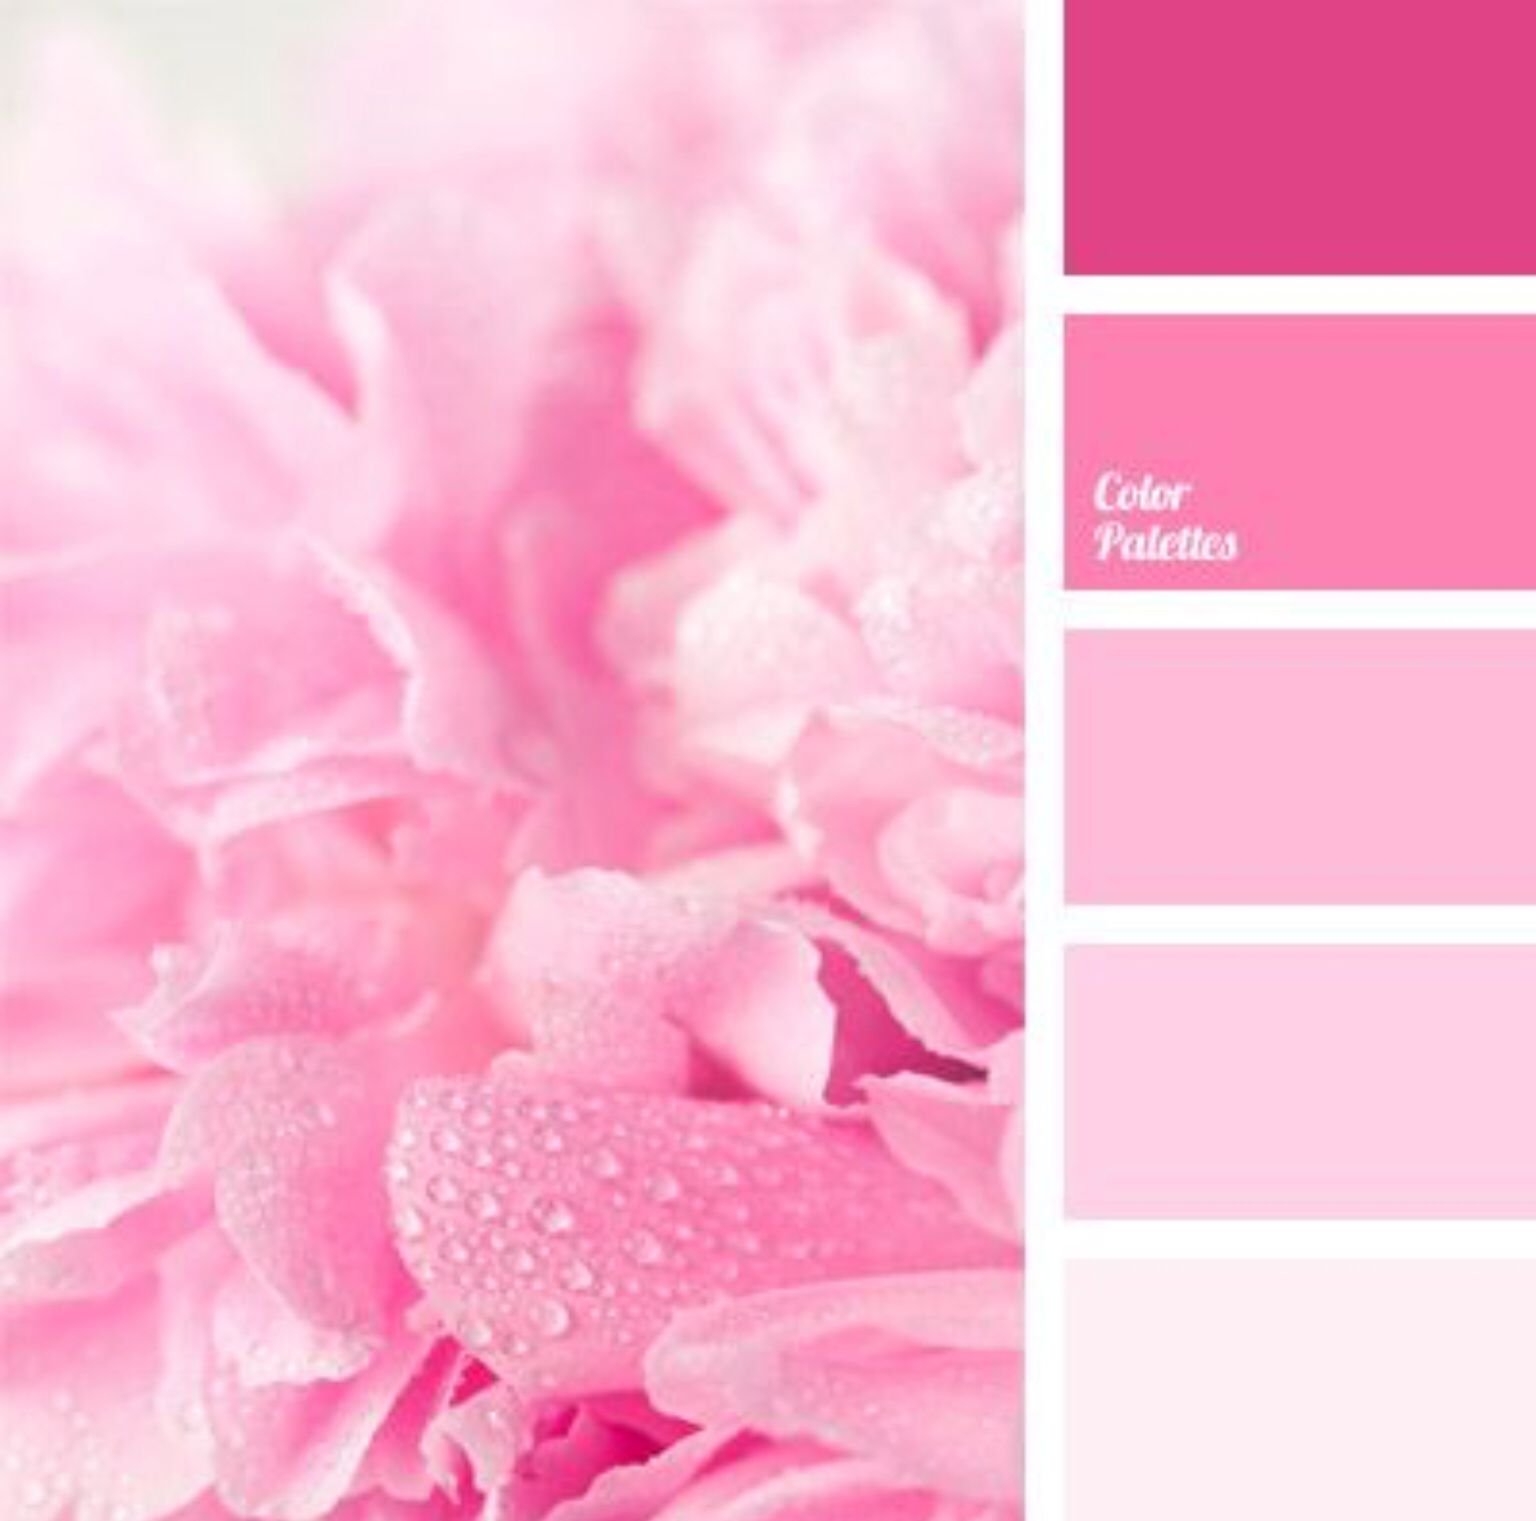 Bh warna pink - 63 photo